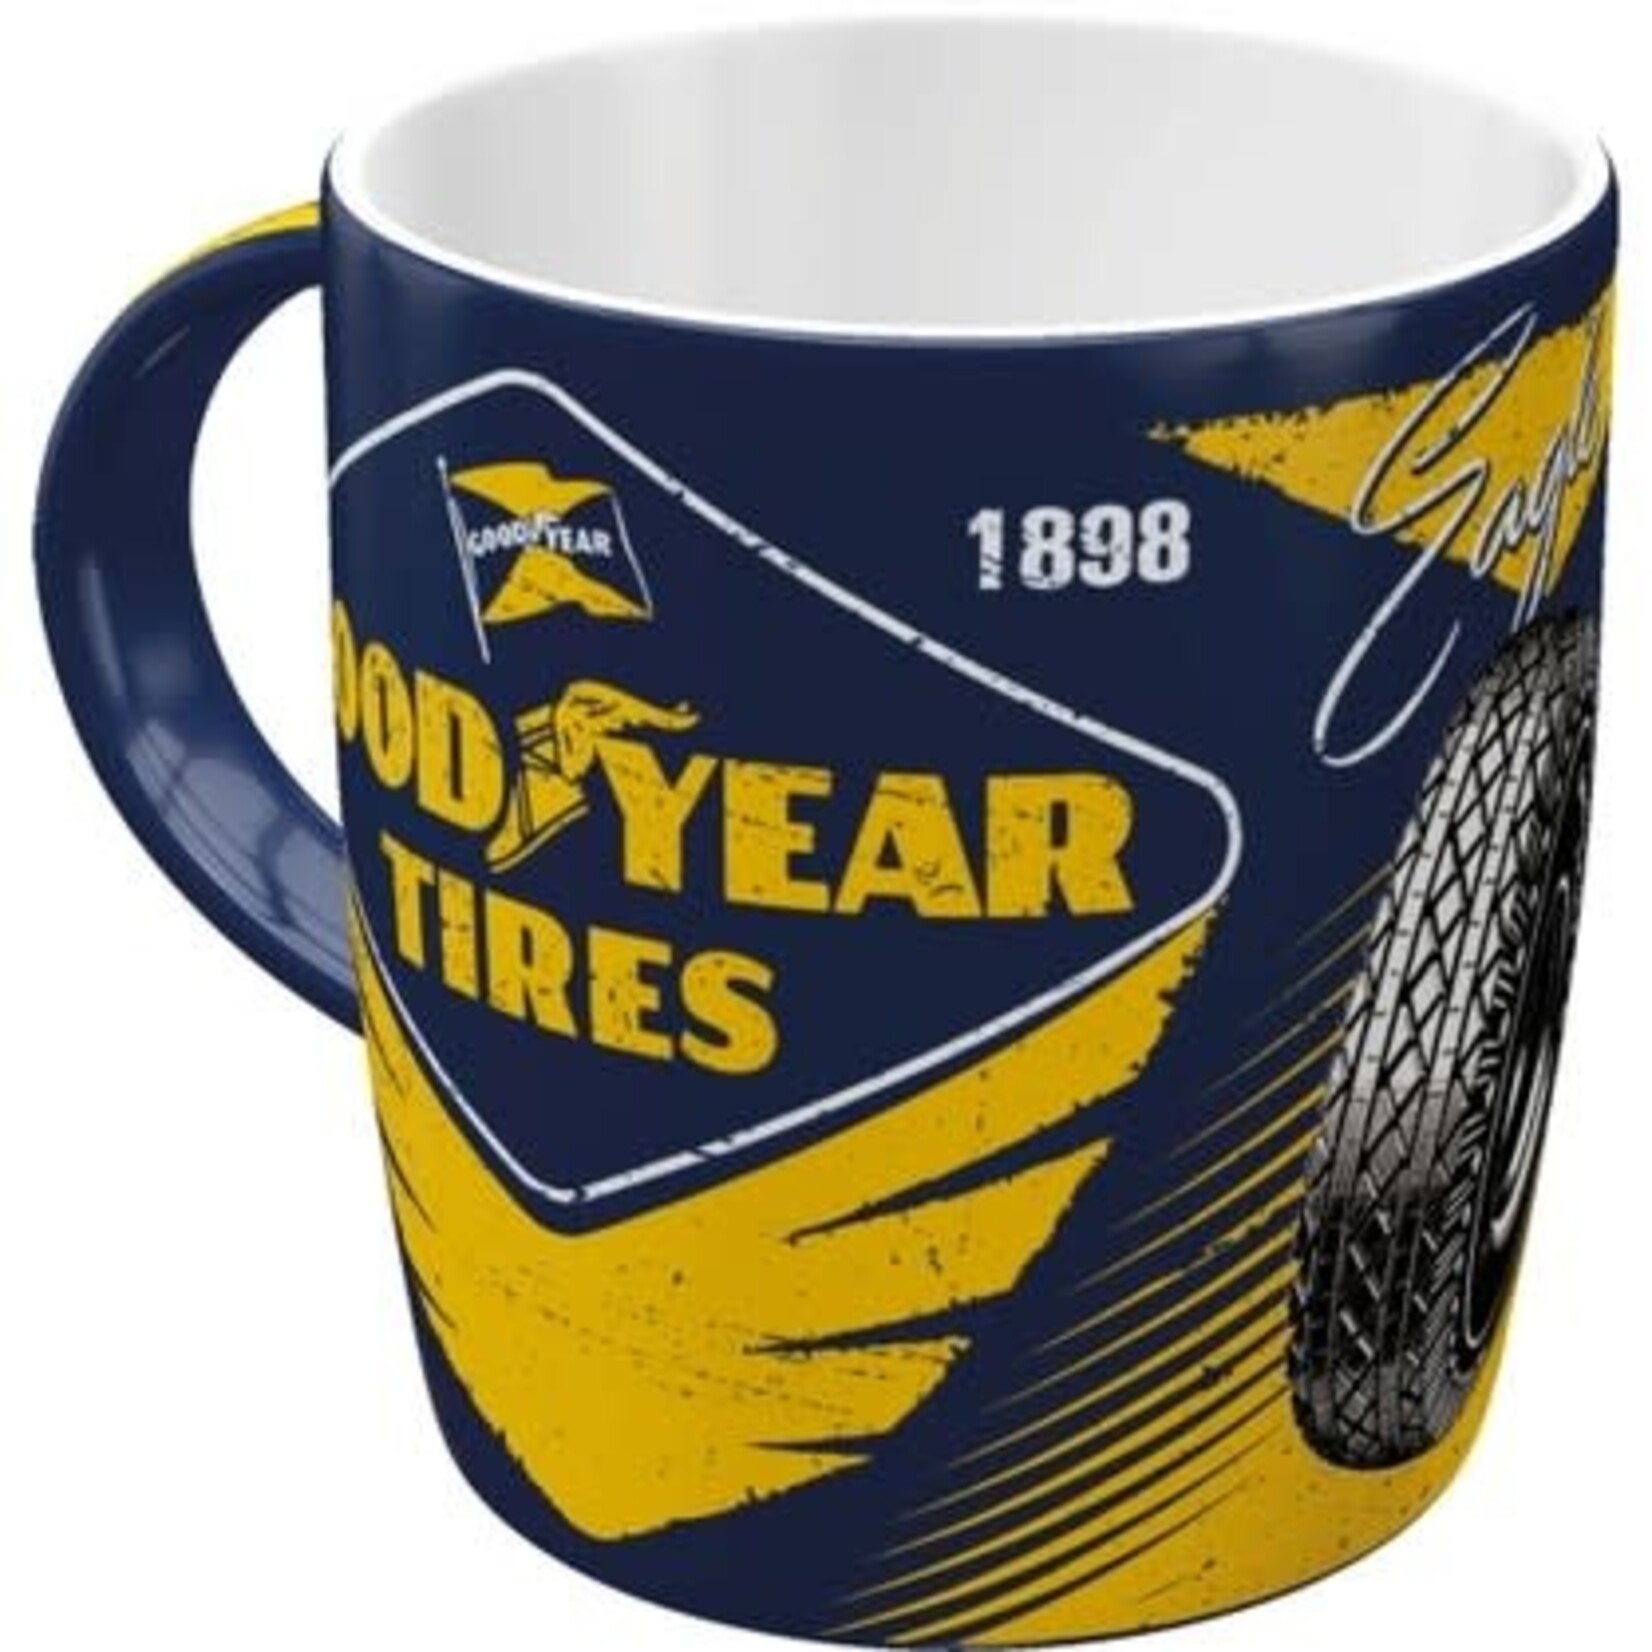 Good Year- Eagle Tire -mug